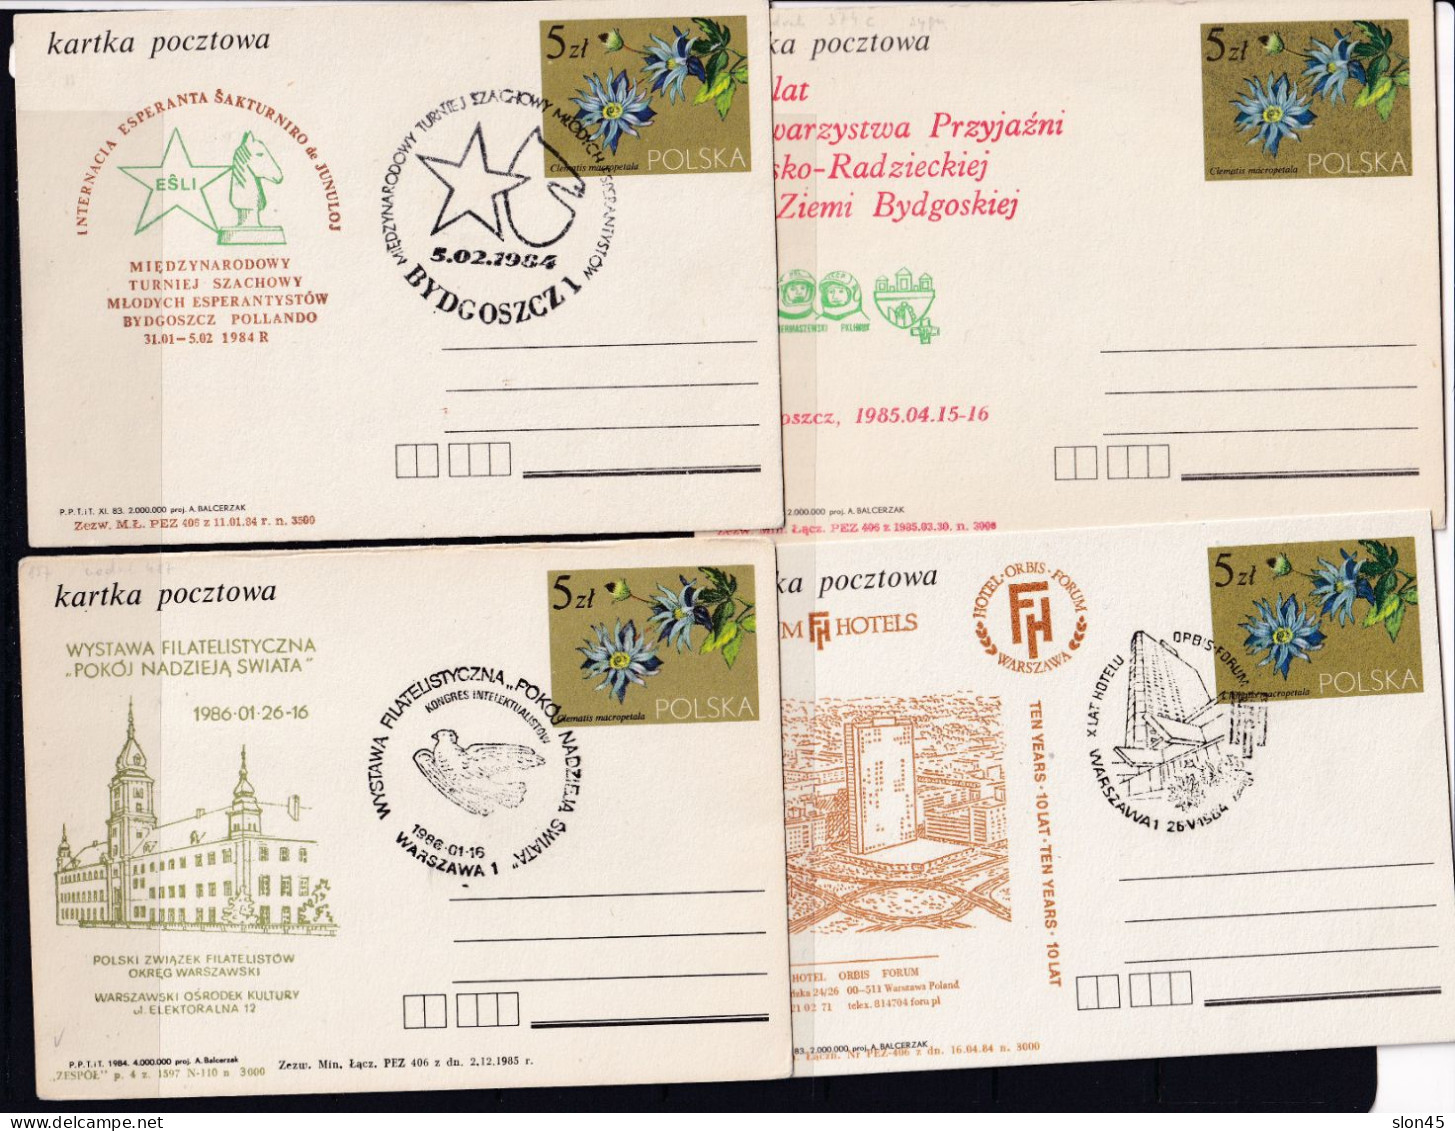 Poland 10 Postal Stationary Card 5zl Special Cancel 16122 - Poland